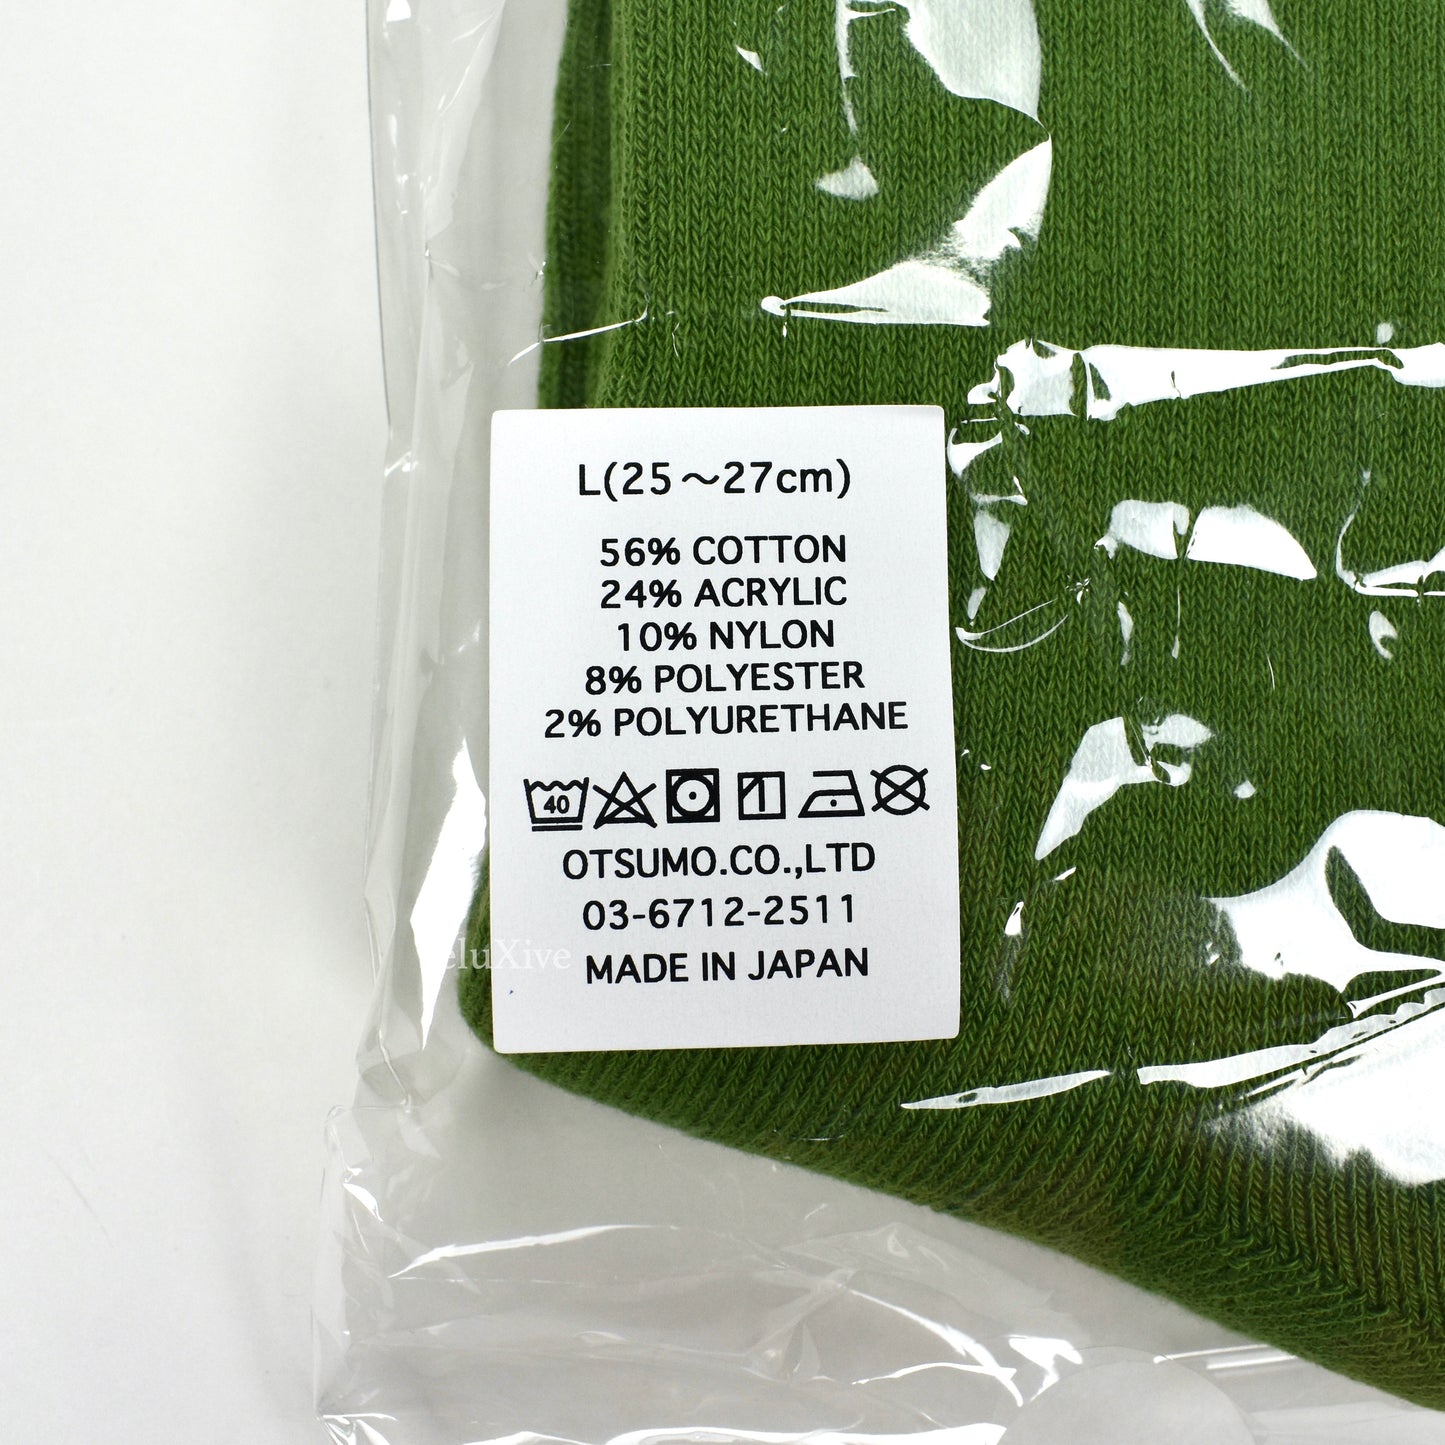 Cactus Plant Flea Market - CPFM Logo Knit Socks (Green)